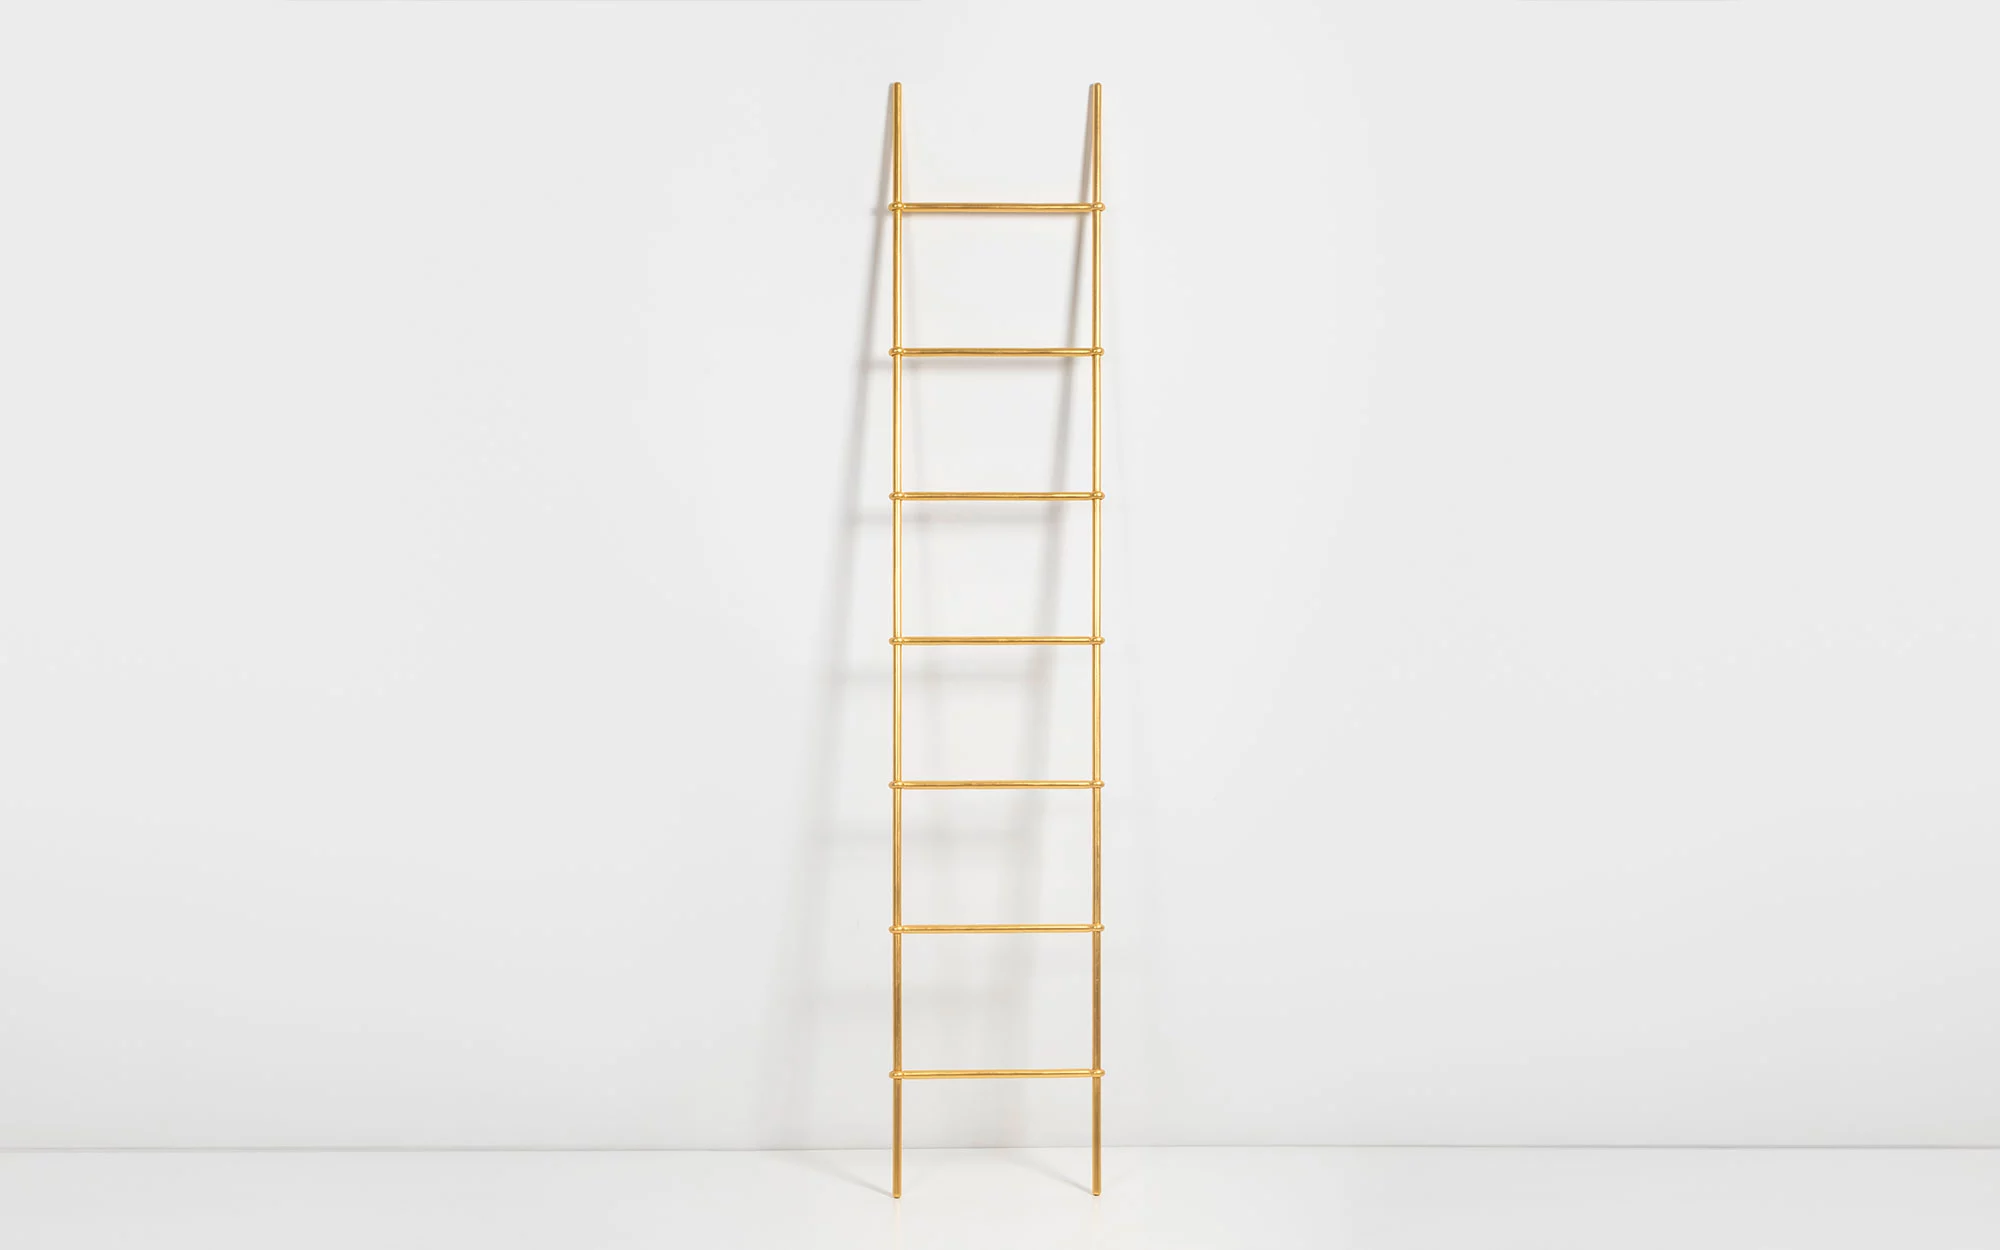 Ciel ladder - Ronan & Erwan Bouroullec - miscellaneous 9589f51cf3a84e479ea7e835dcba1a04- Galerie kreo